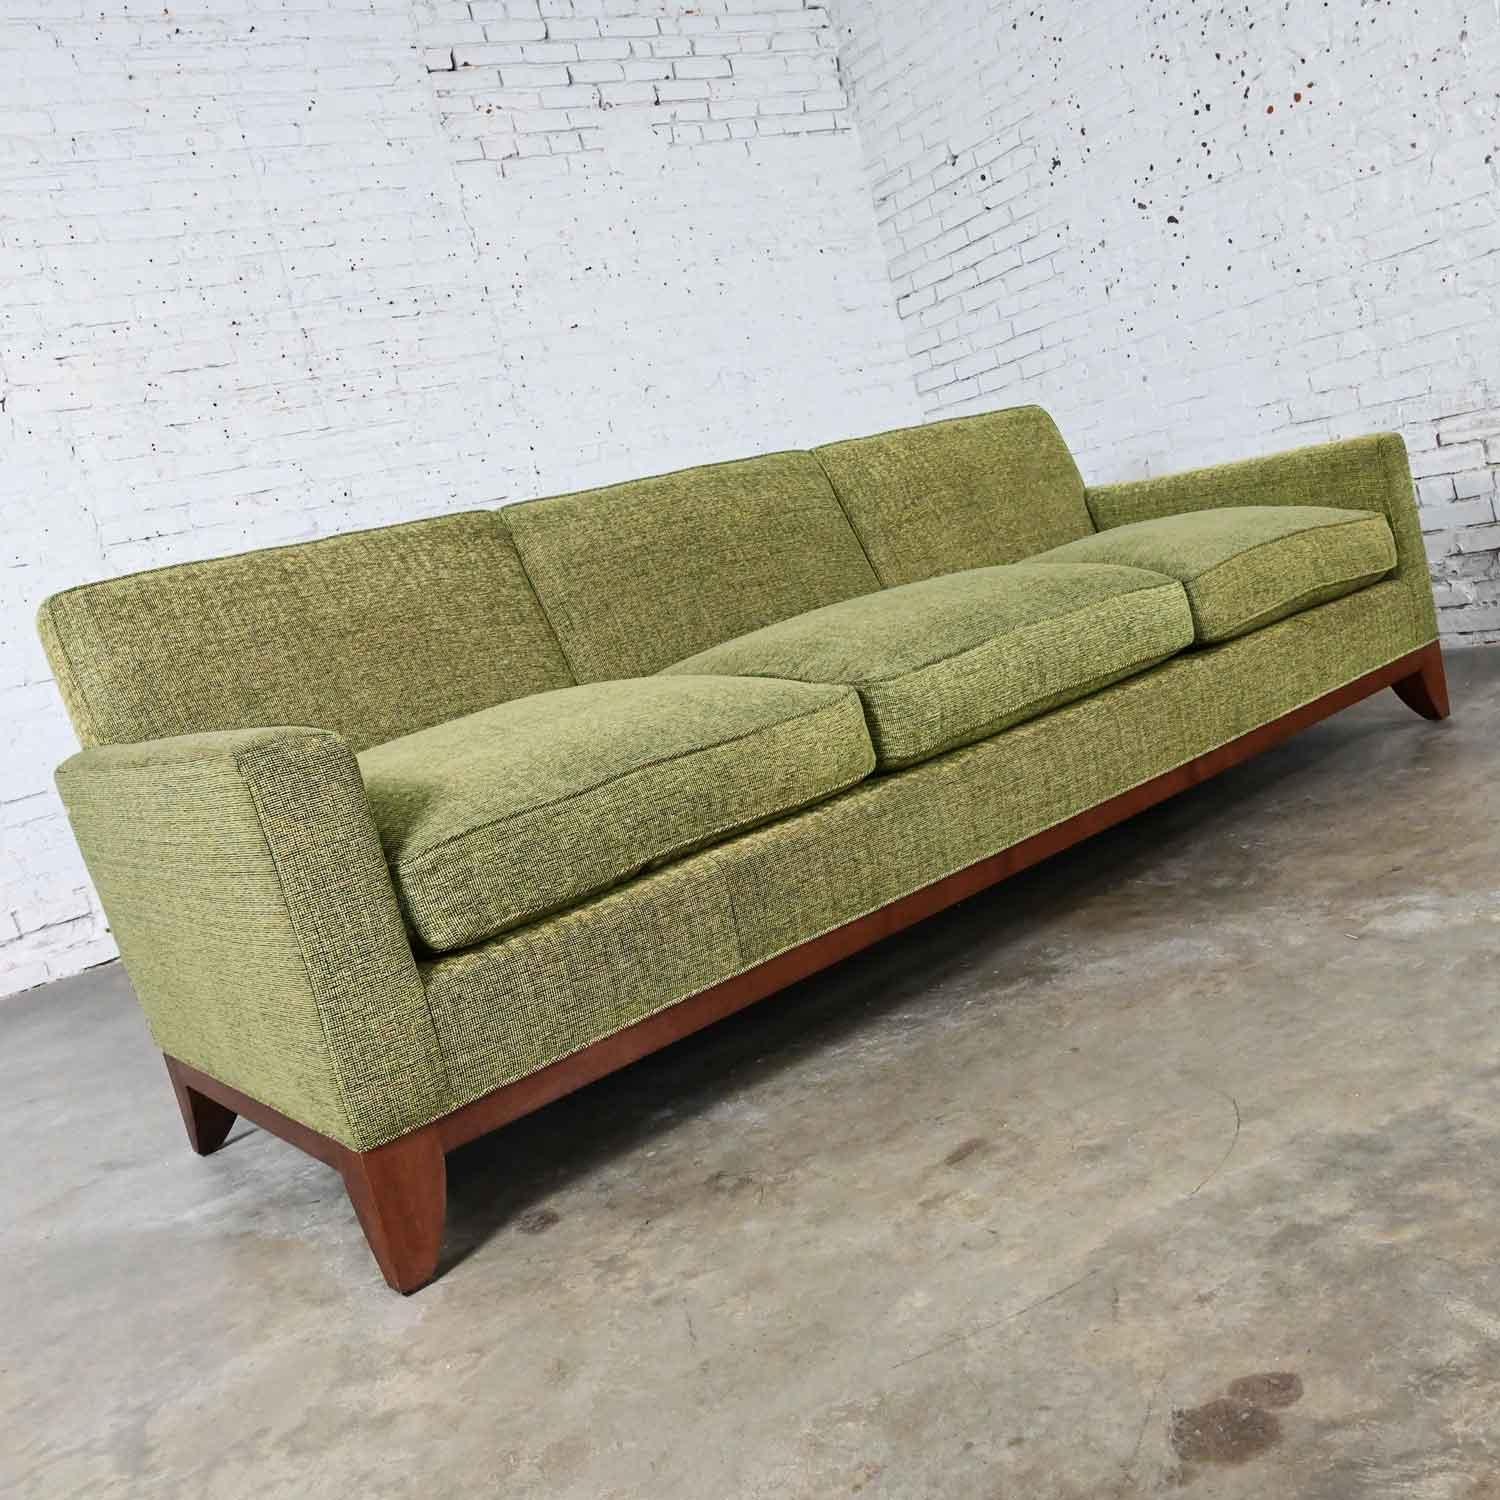 lawson style sofa